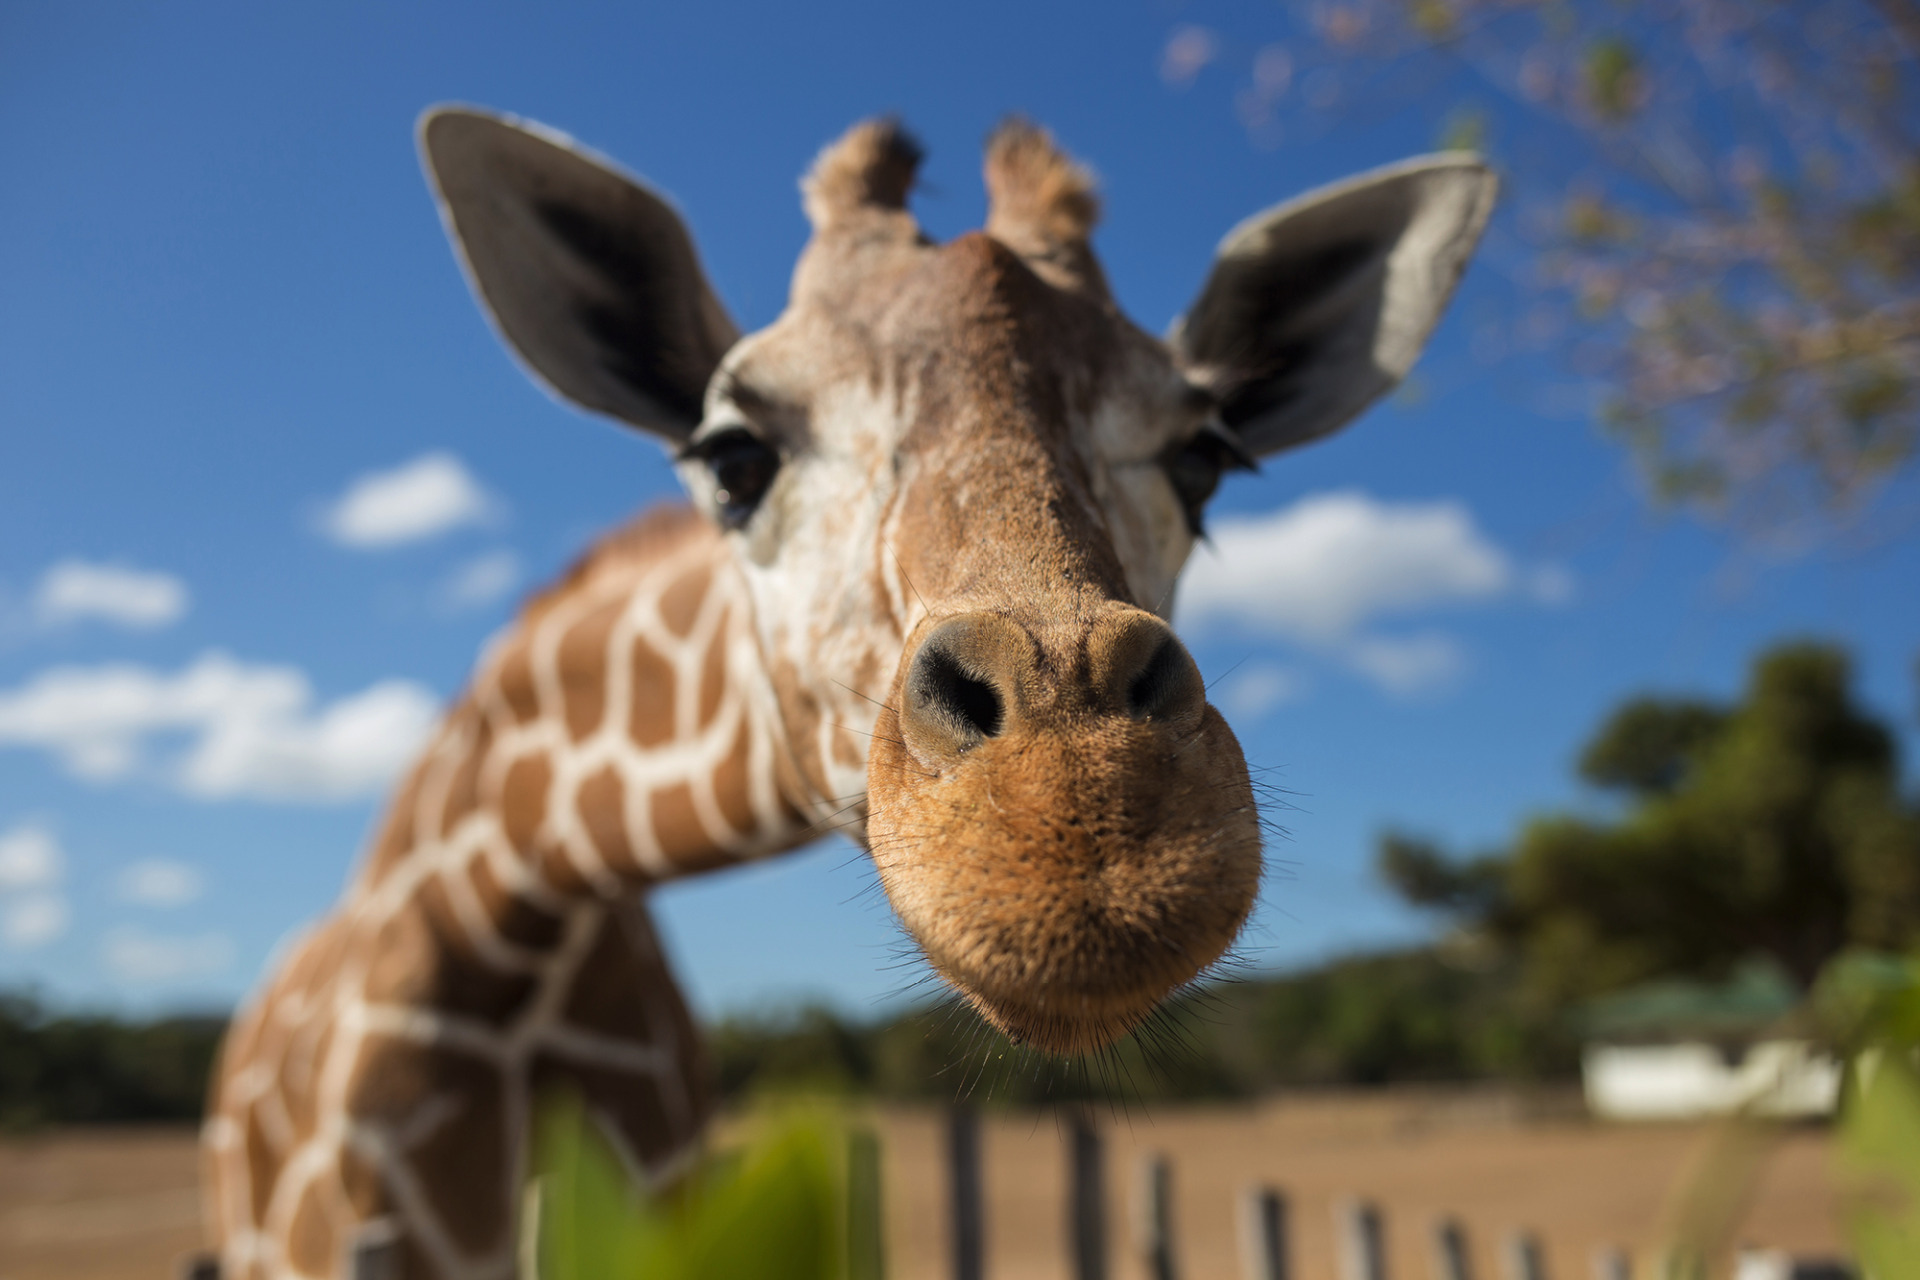 Giraffe at Paignton Zoo